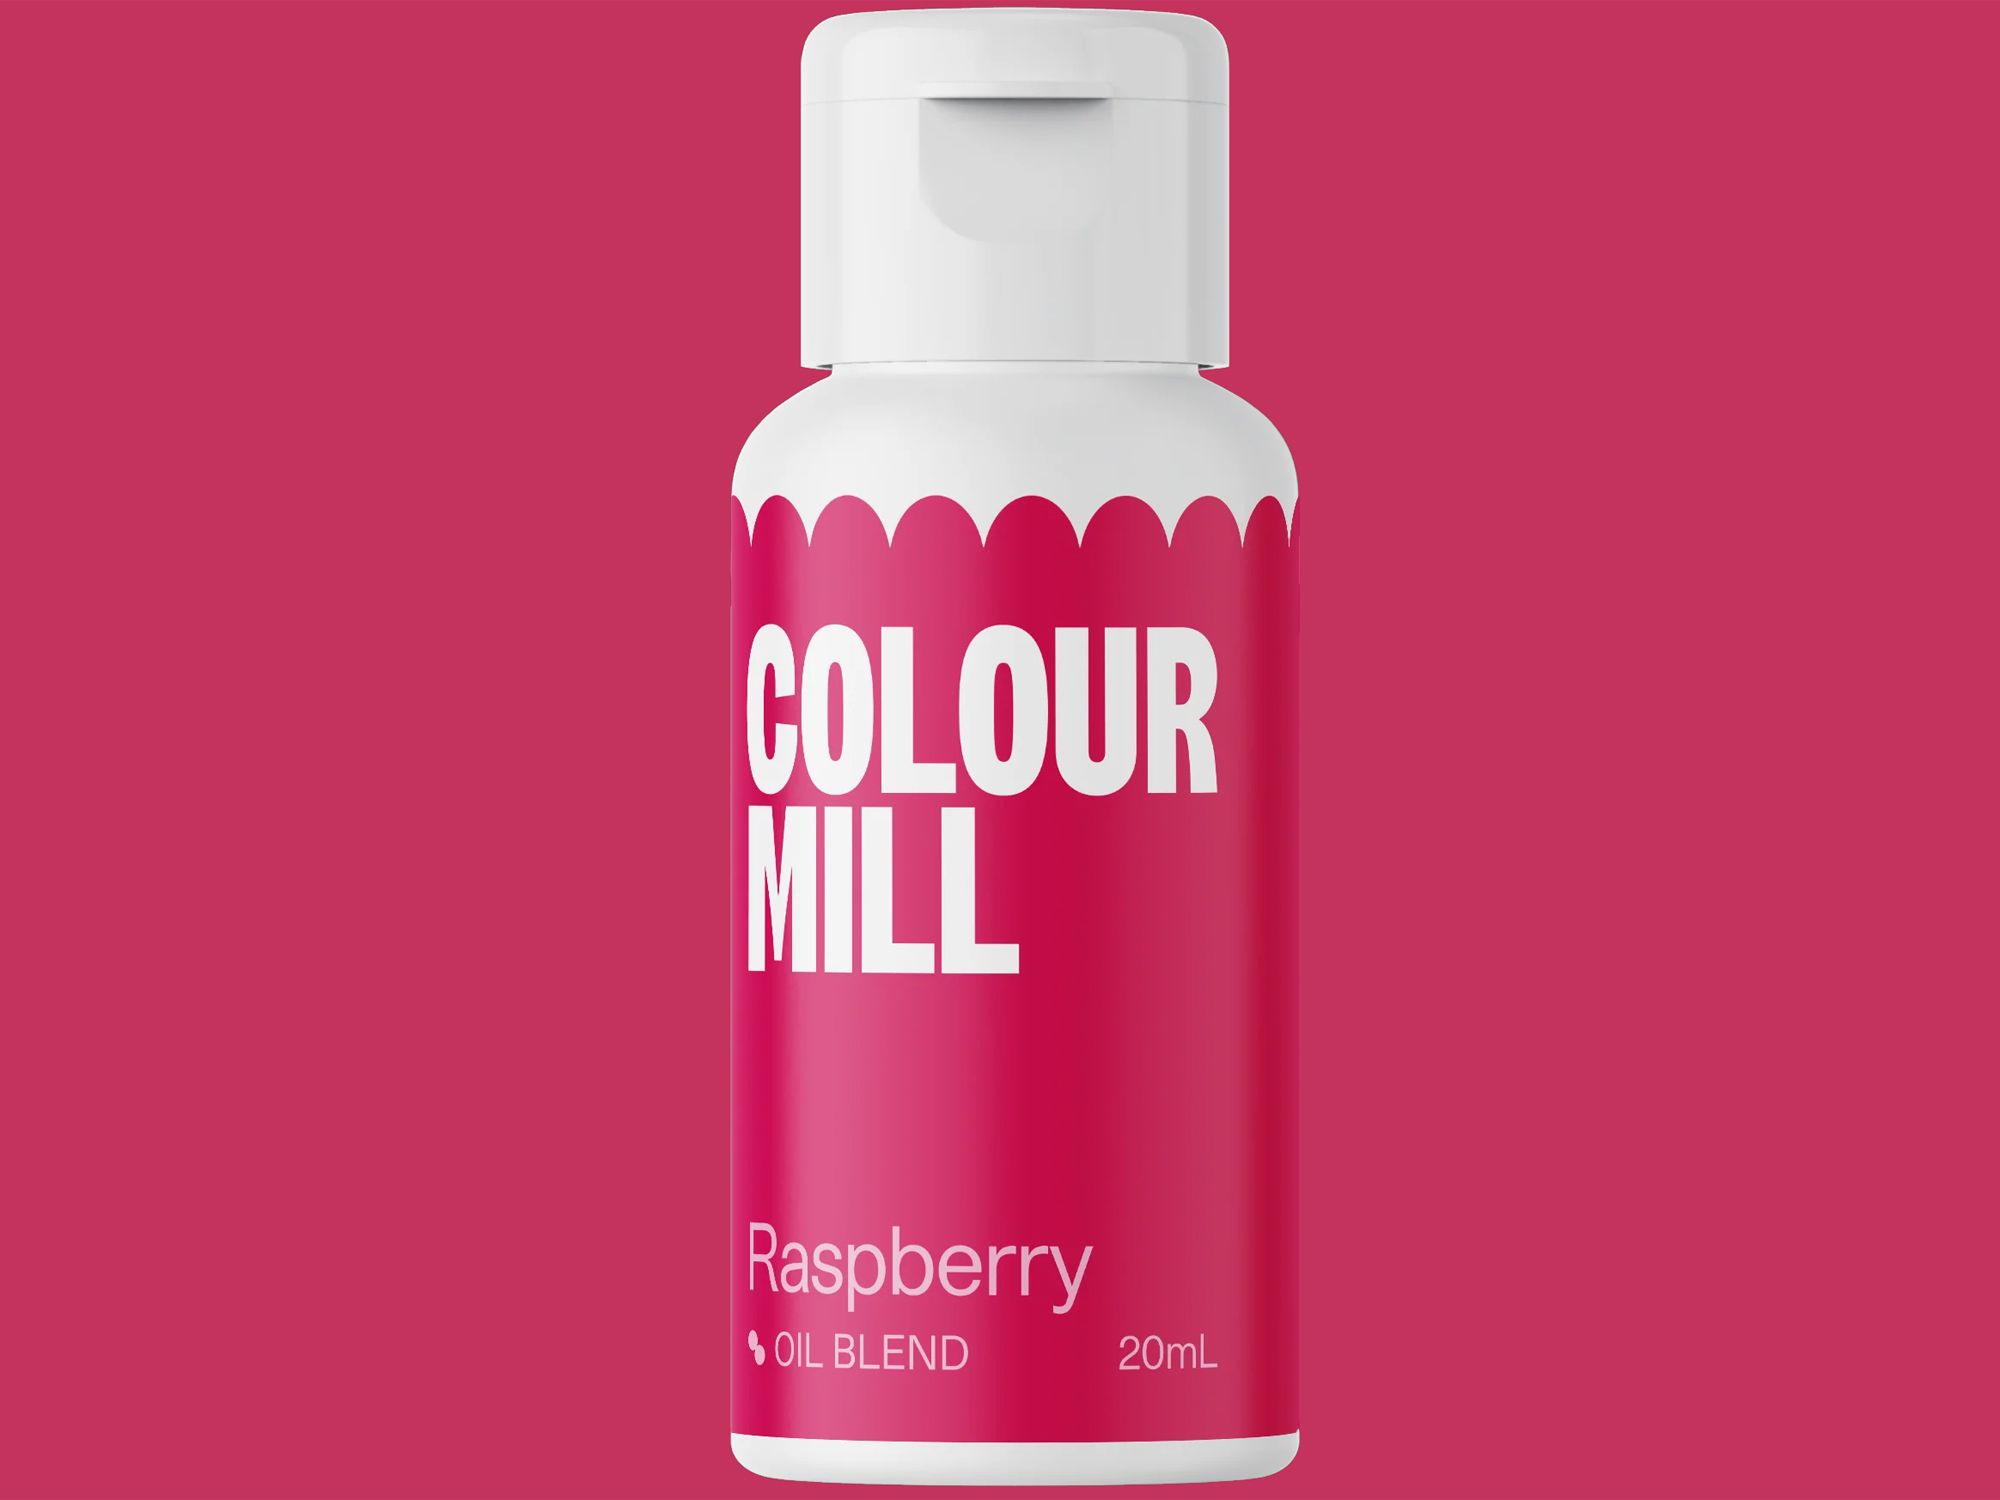 Colour Mill Raspberry (Oil Blend) 20ml